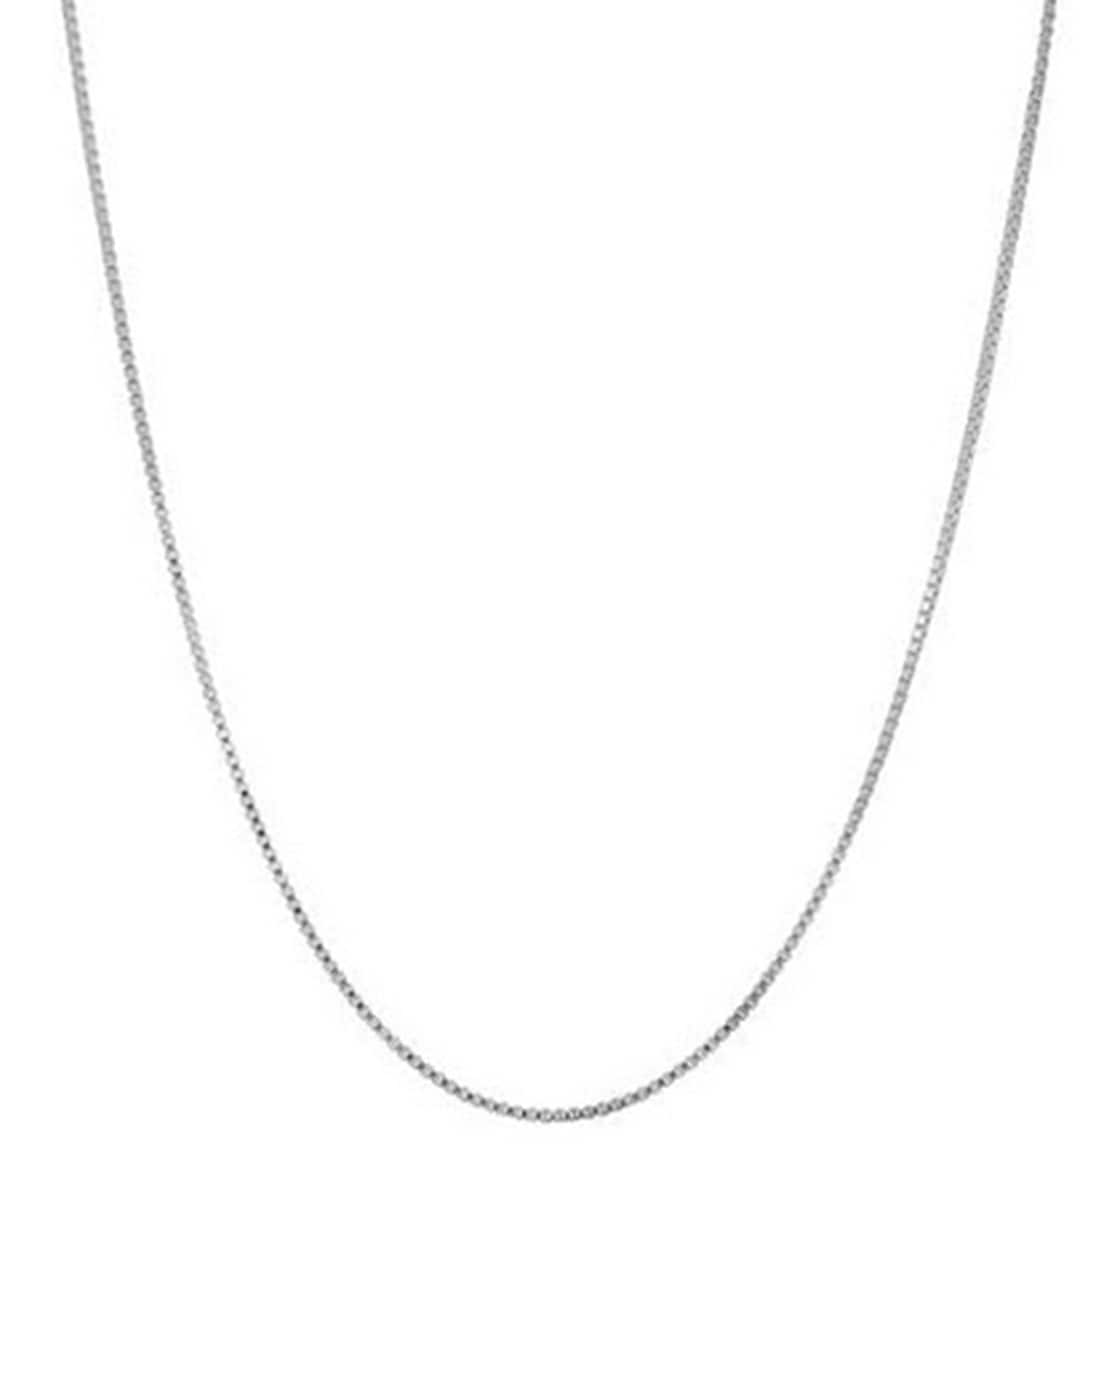 Pure S925 Sterling Silver Chain Men Women 5mm Byzantine Link Necklace | eBay